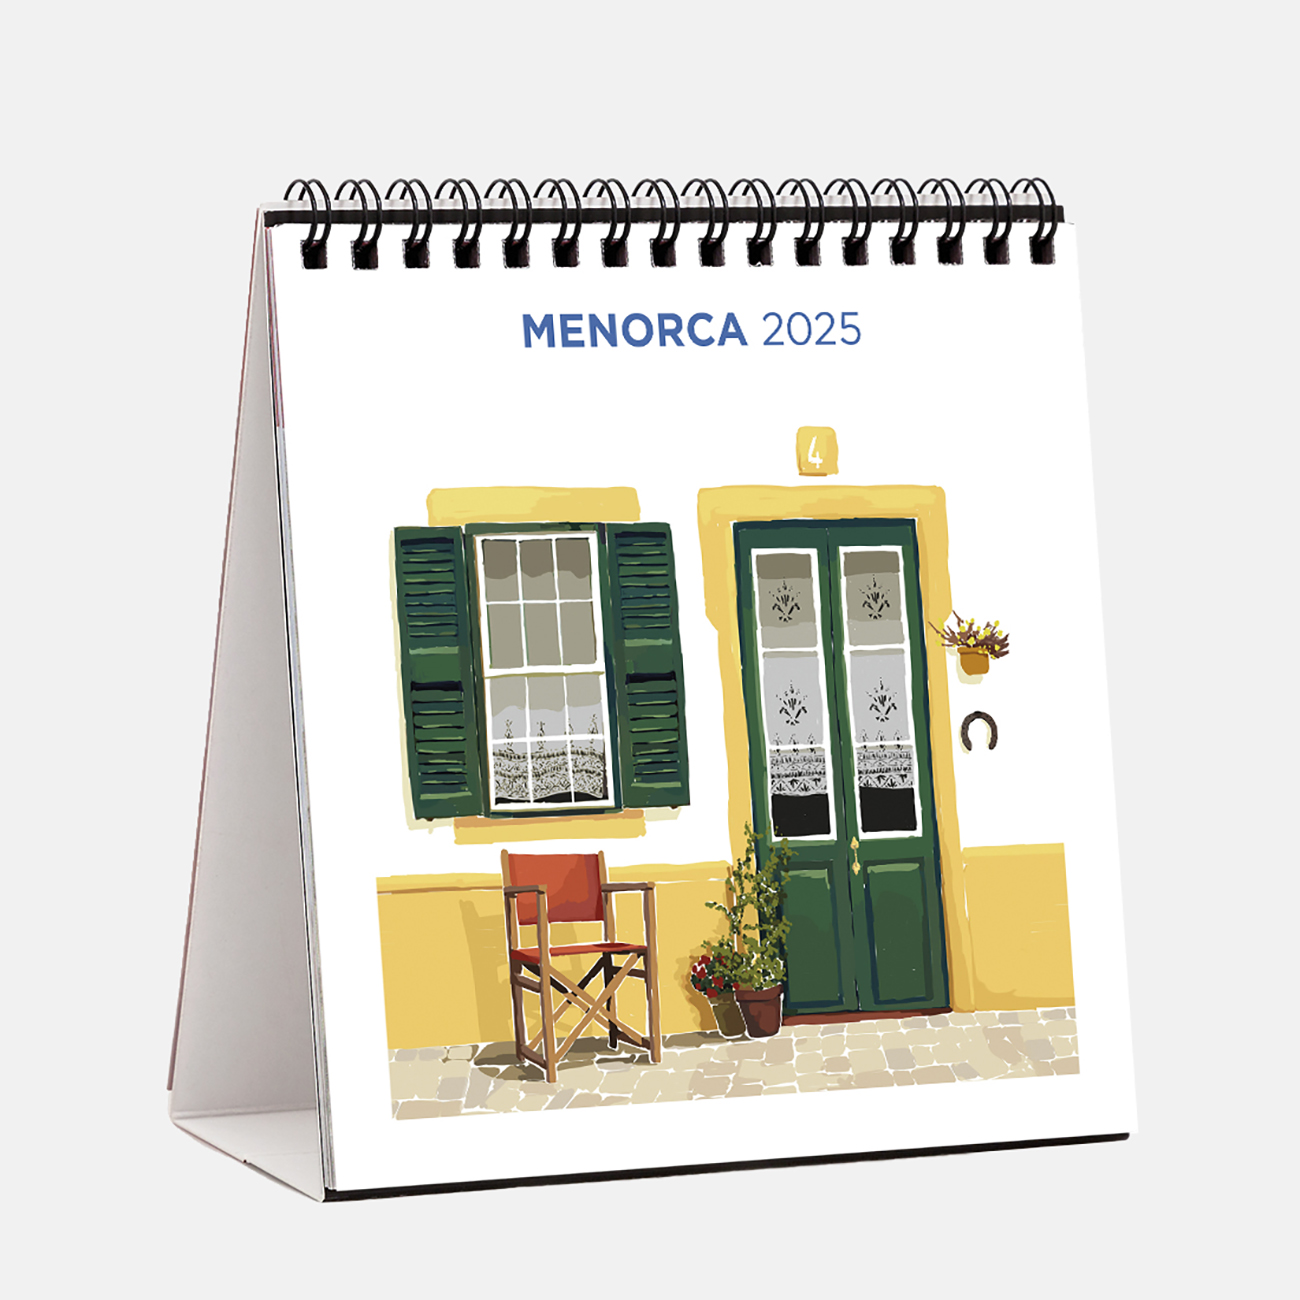 Calendari 2025 Menorca Il·lustrat s25me2 calendario sobremesa 2025 menorca